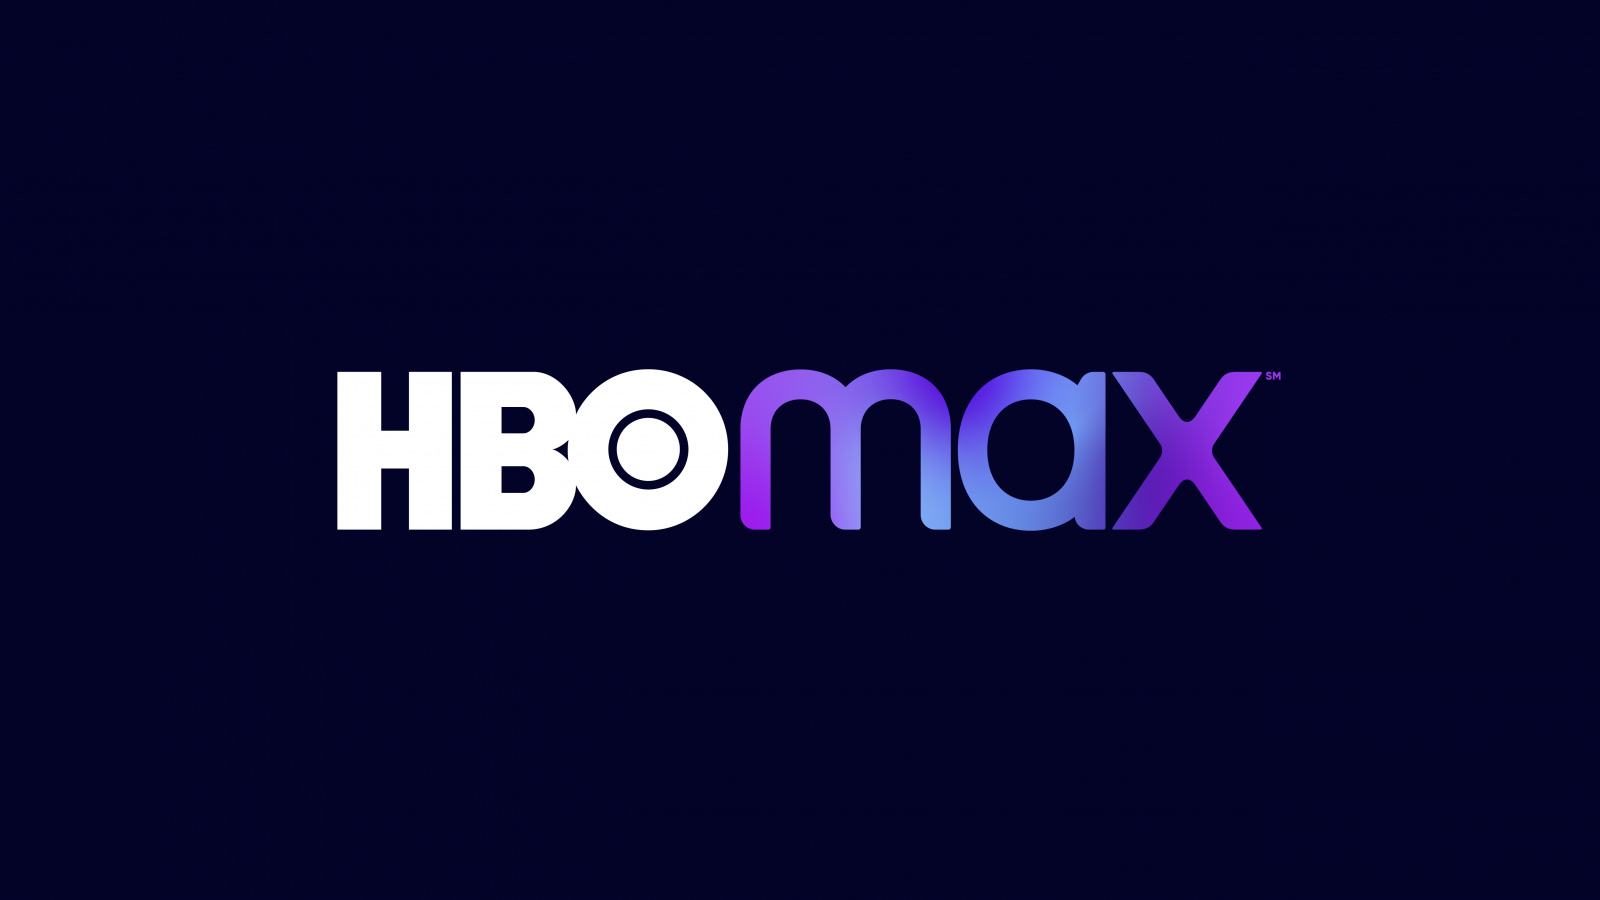 HBO Max anuncia primeira série original brasileira